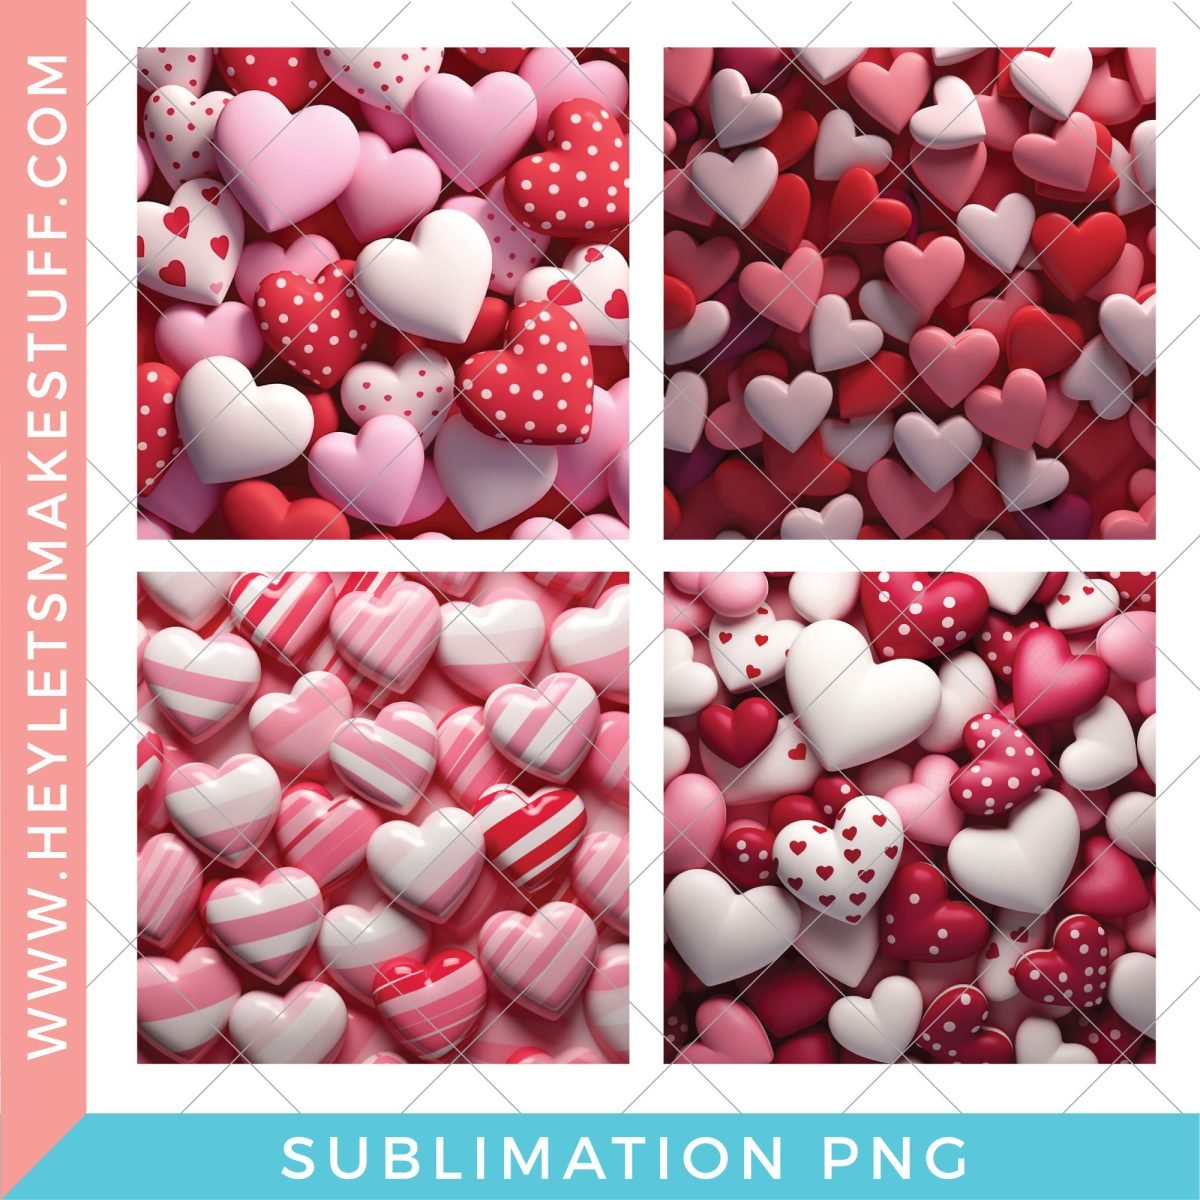 Four sublimation heart patterns